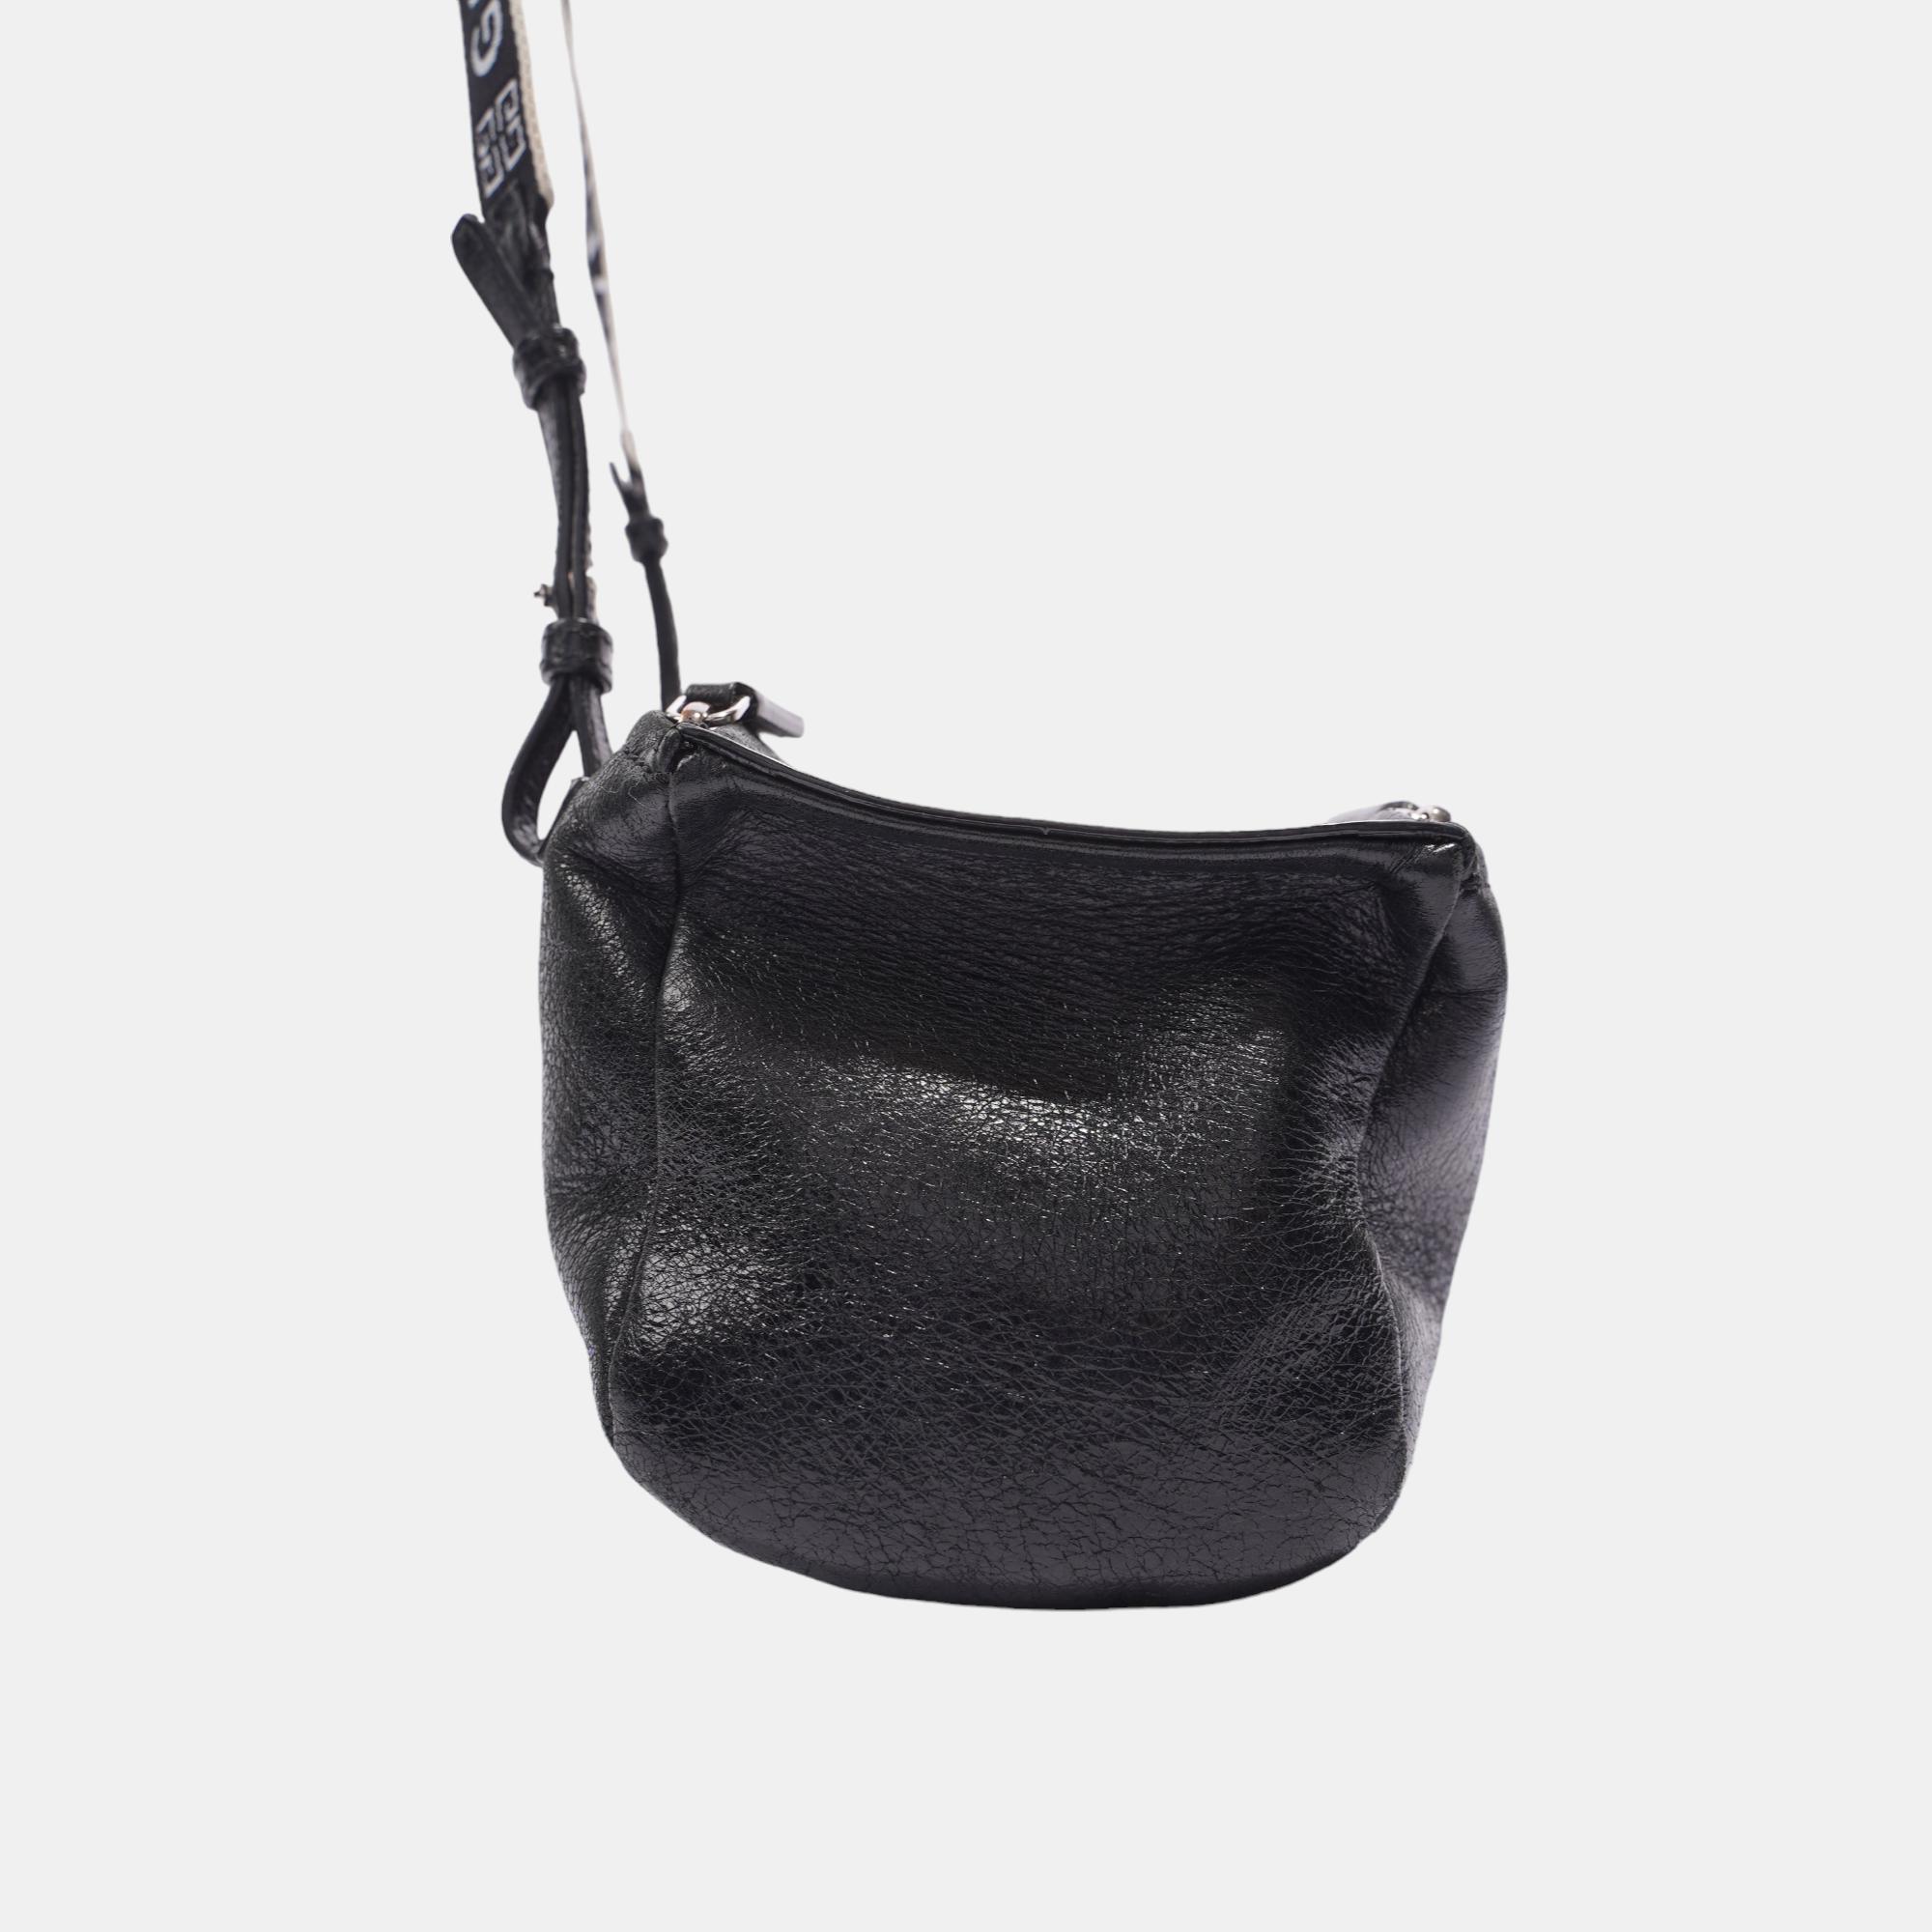 Givenchy Pandora Bag Black Leather Small